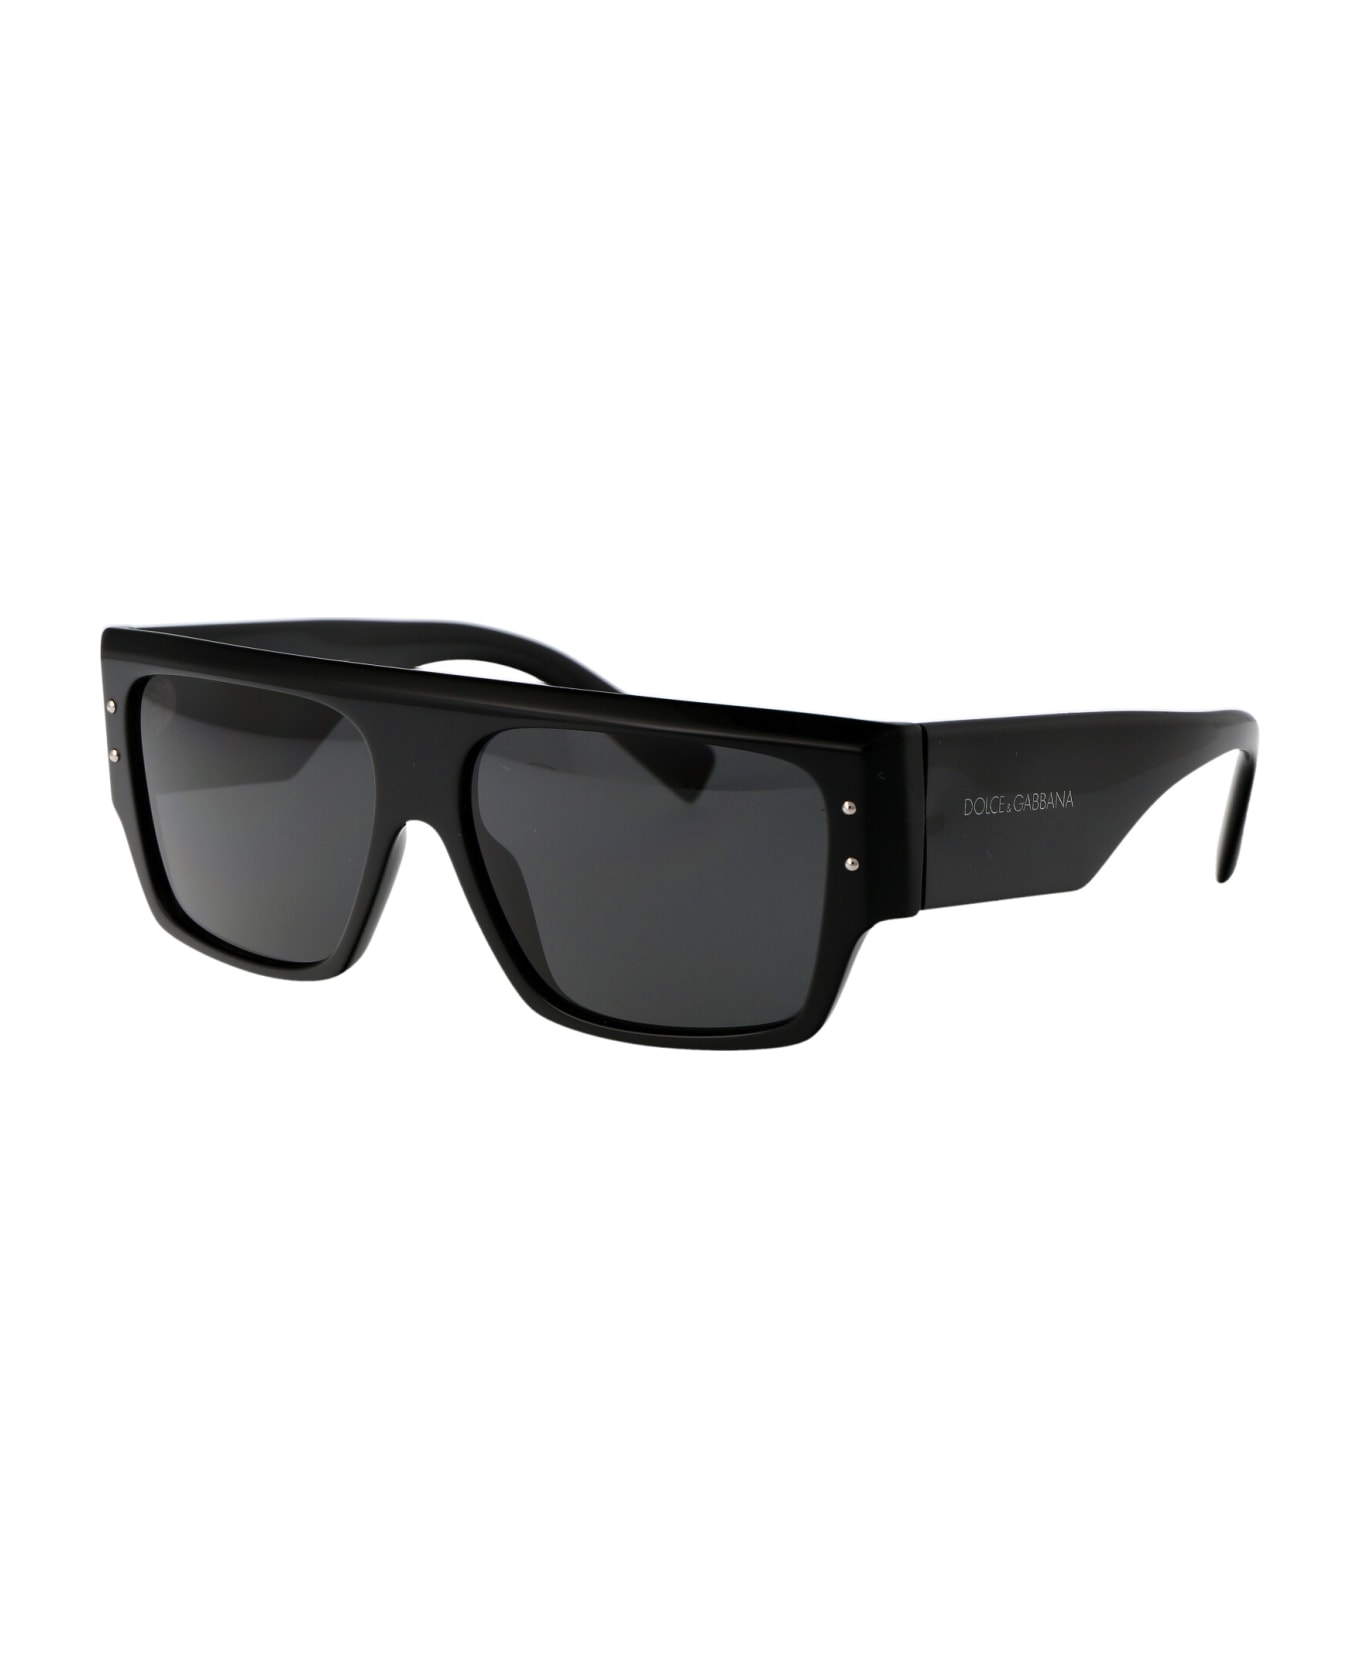 Dolce & Gabbana Eyewear 0dg4459 Sunglasses - 501/87 BLACK サングラス